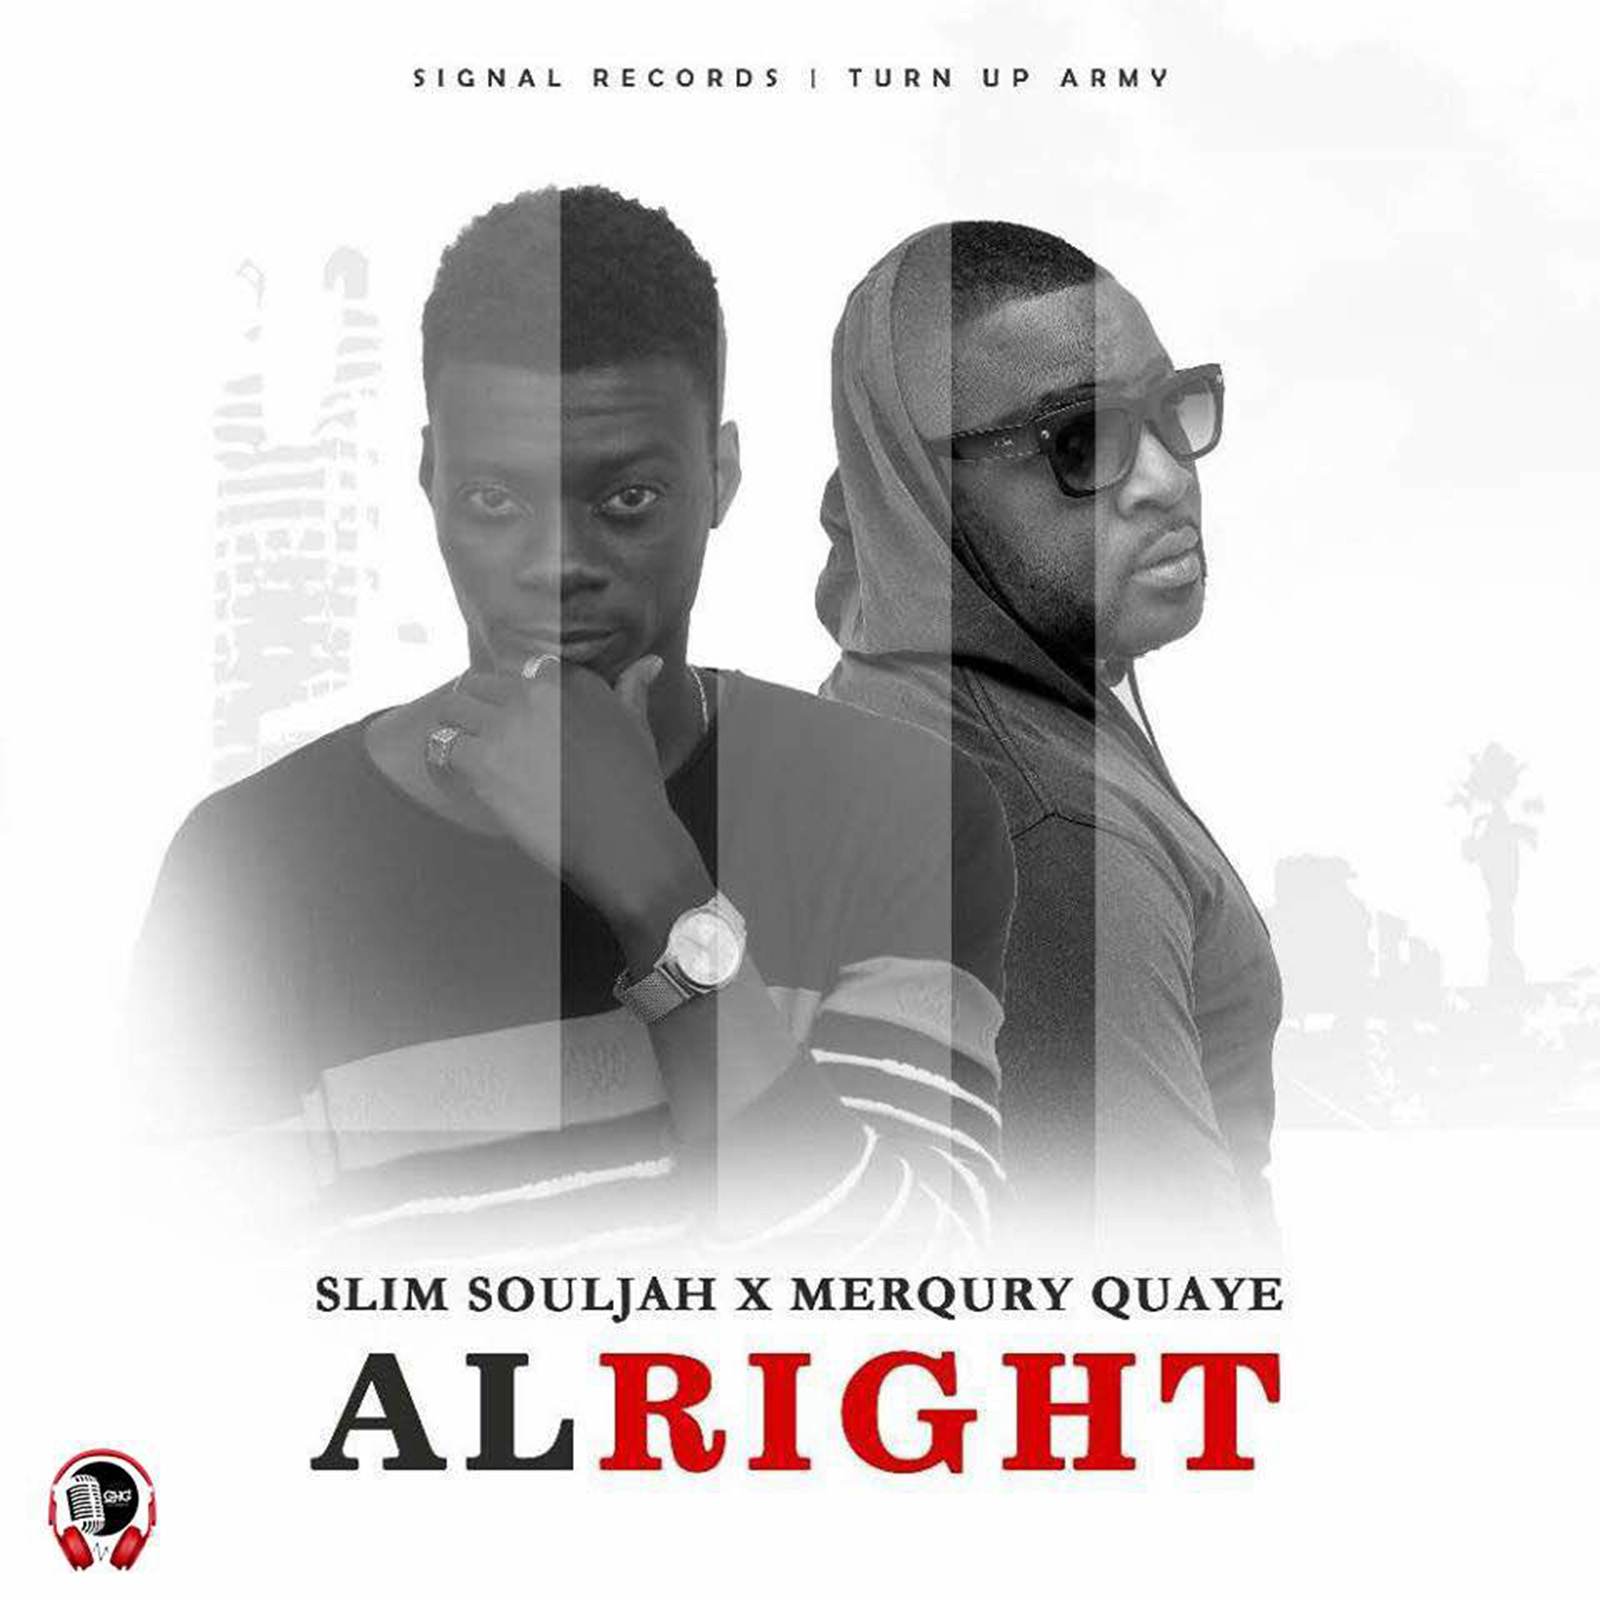 Alright by Slim Souljah feat. Merqury Quaye